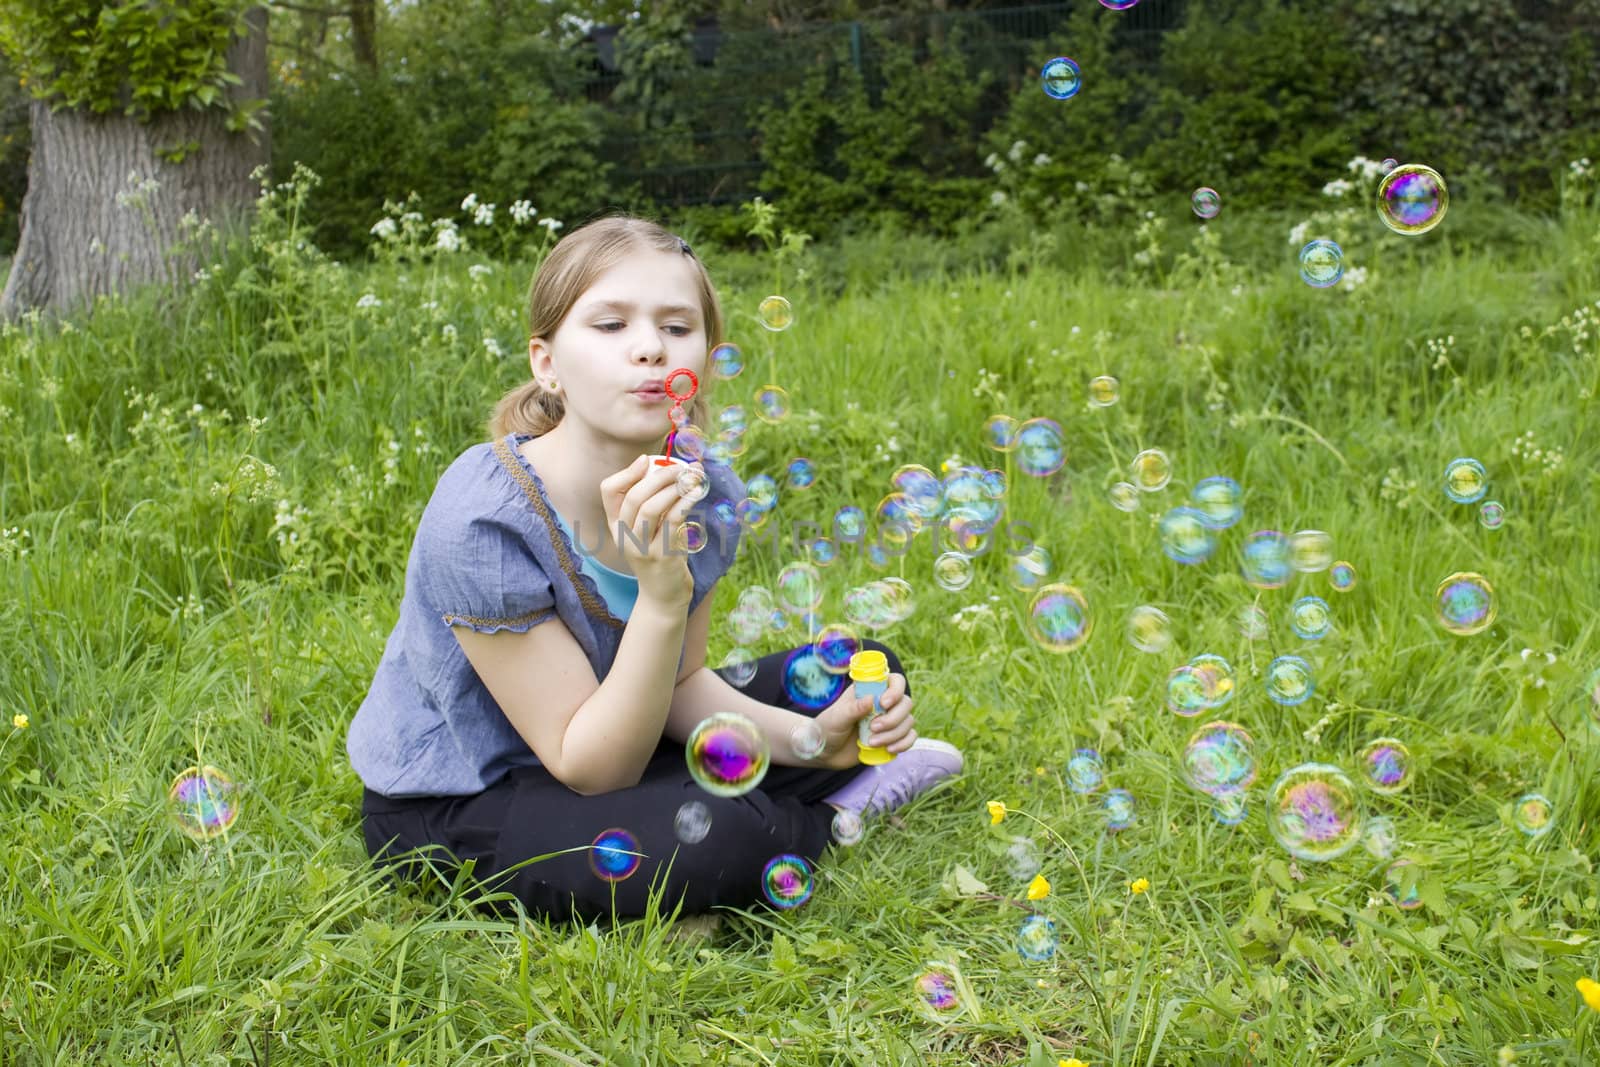 Little girl blowing soap bubbles by miradrozdowski